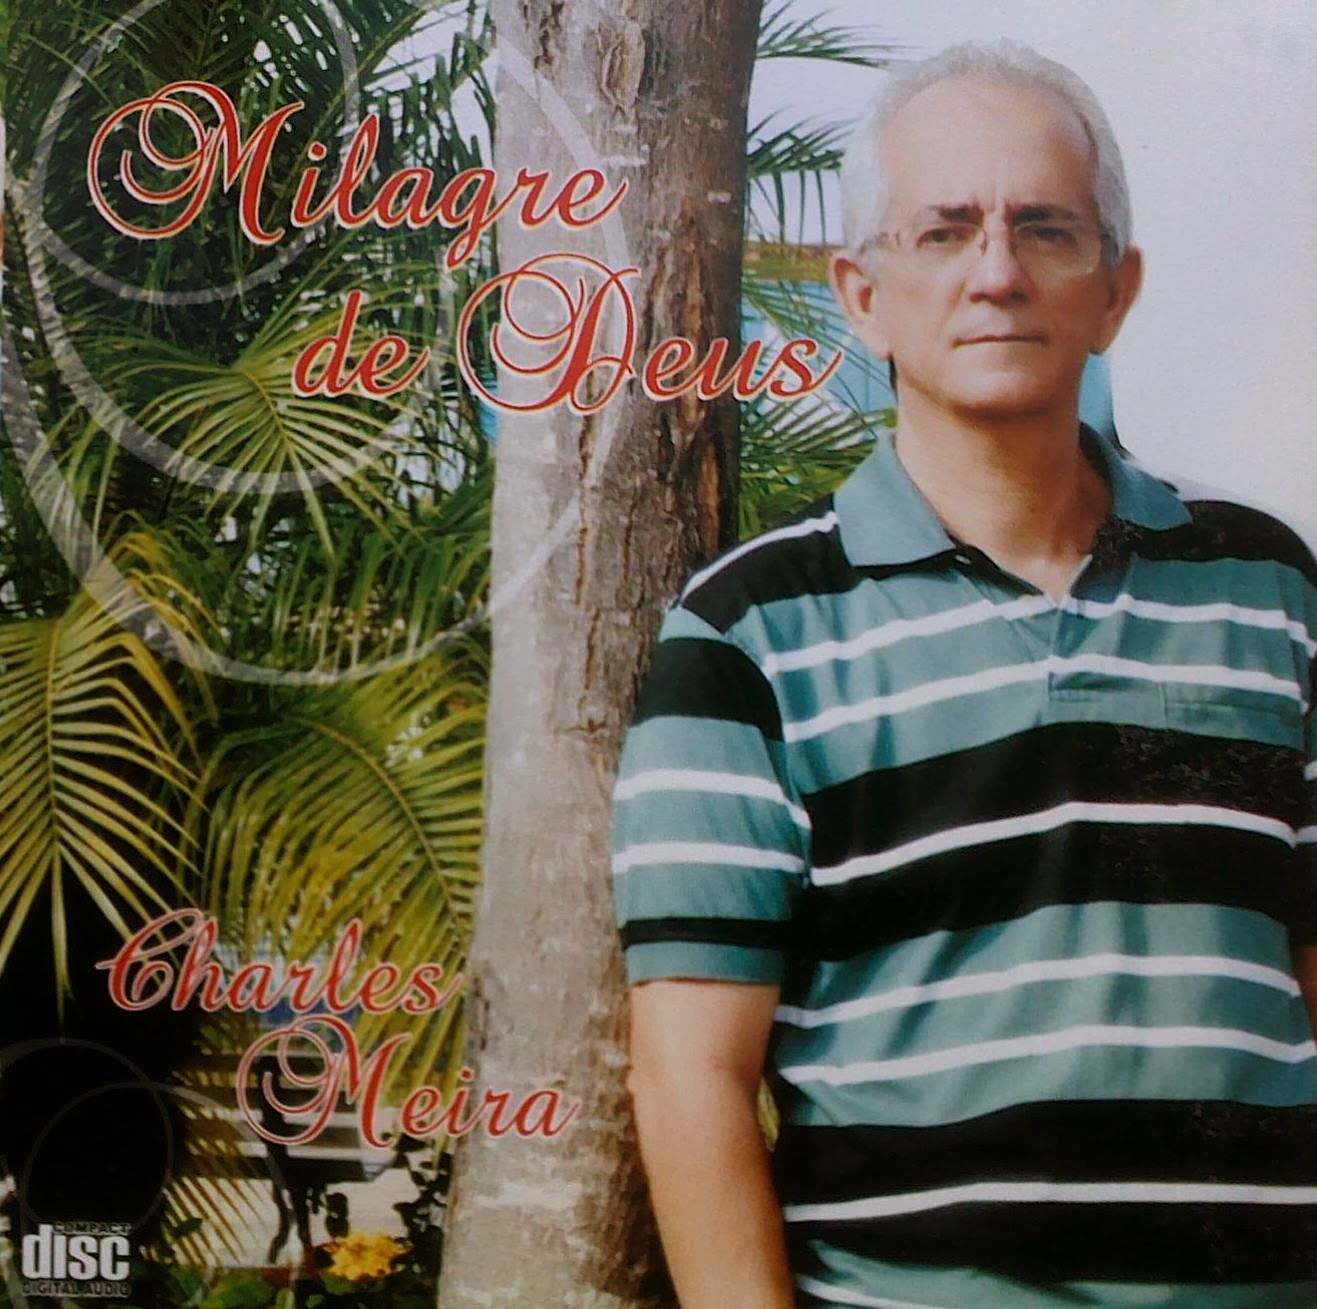 Capa do CD "Milagre de Deus" do cantor Charles Meira